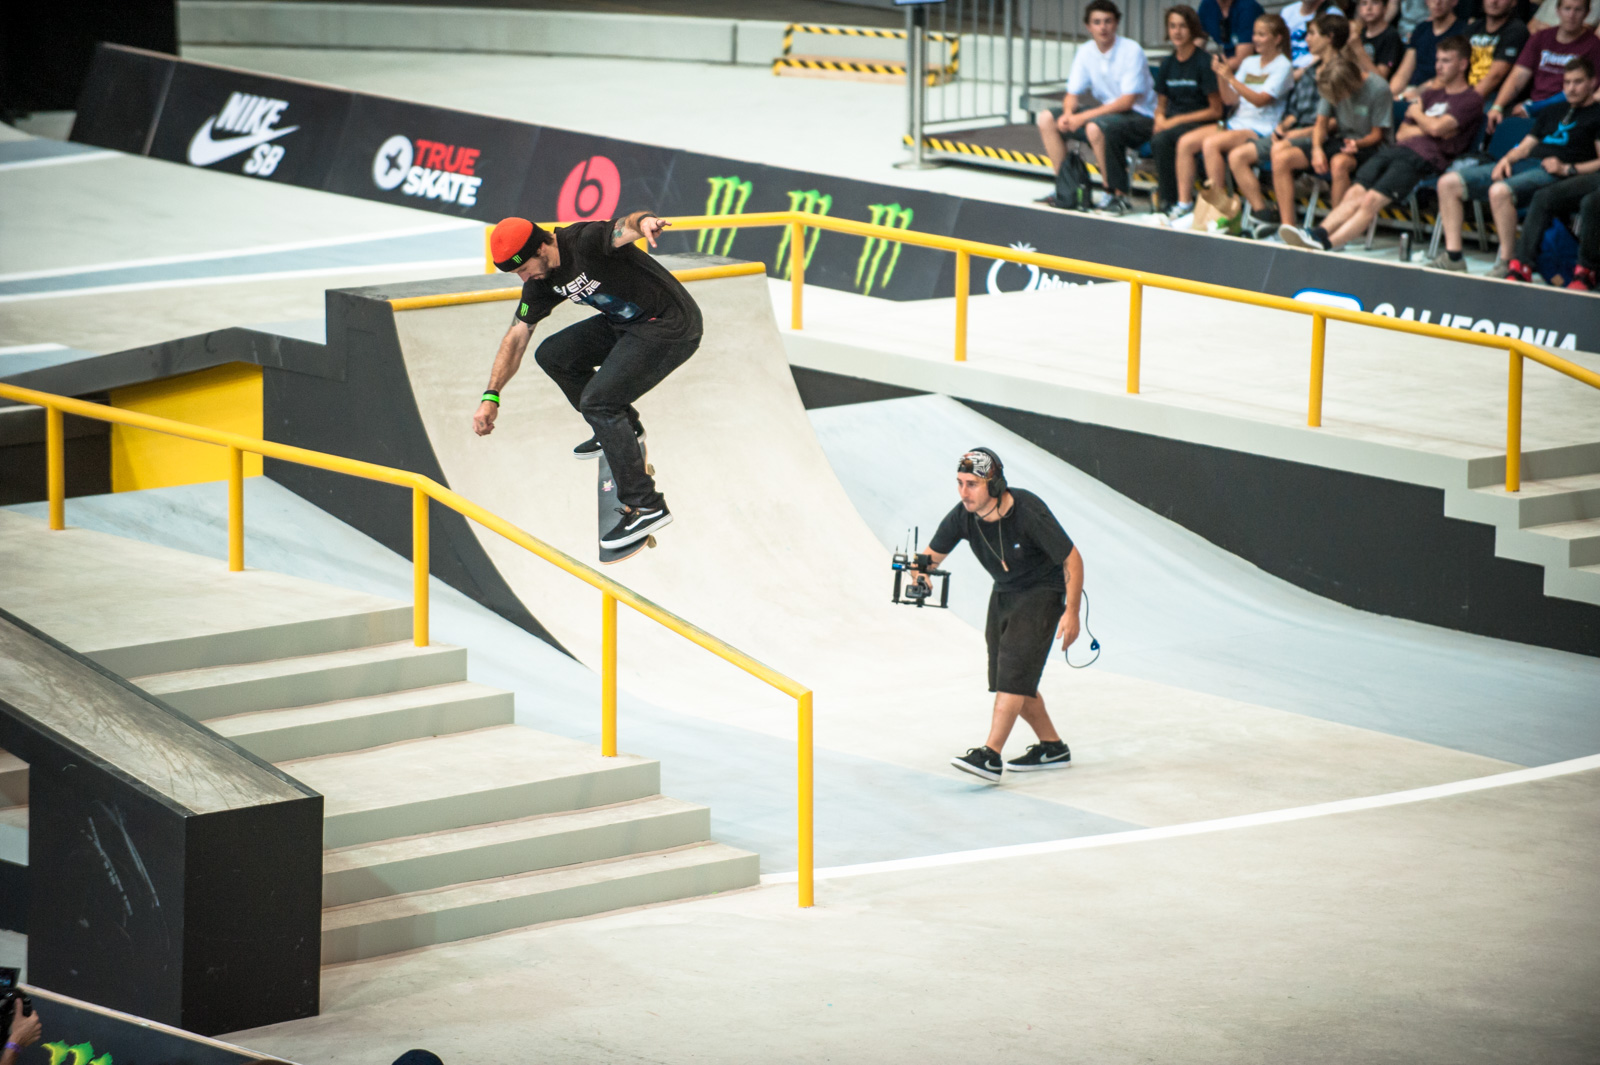 Monster Energy's Chris Cole at Street League Skateboarding Nike SB World tour Munich